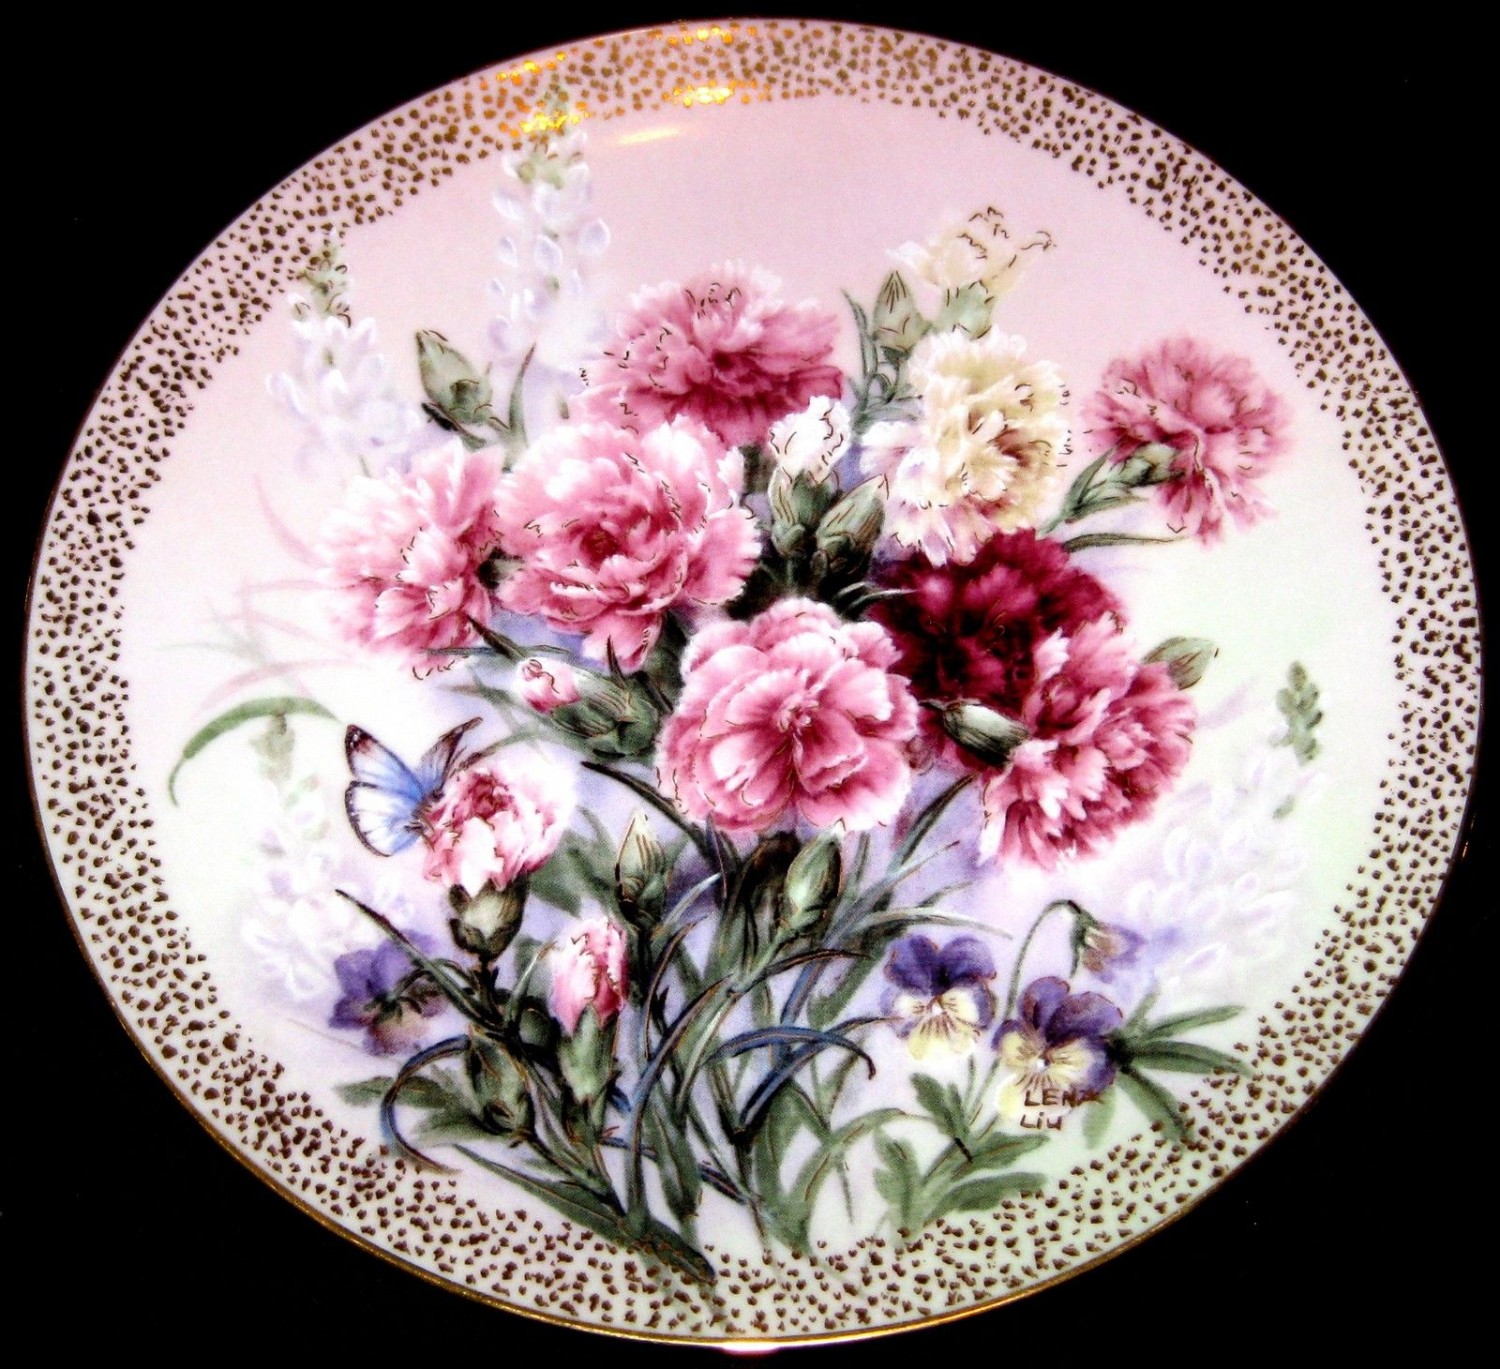 Carnation Serenade by Lena Liu /Symphony of Shimmering Beauty 1992-Plate # 4022A